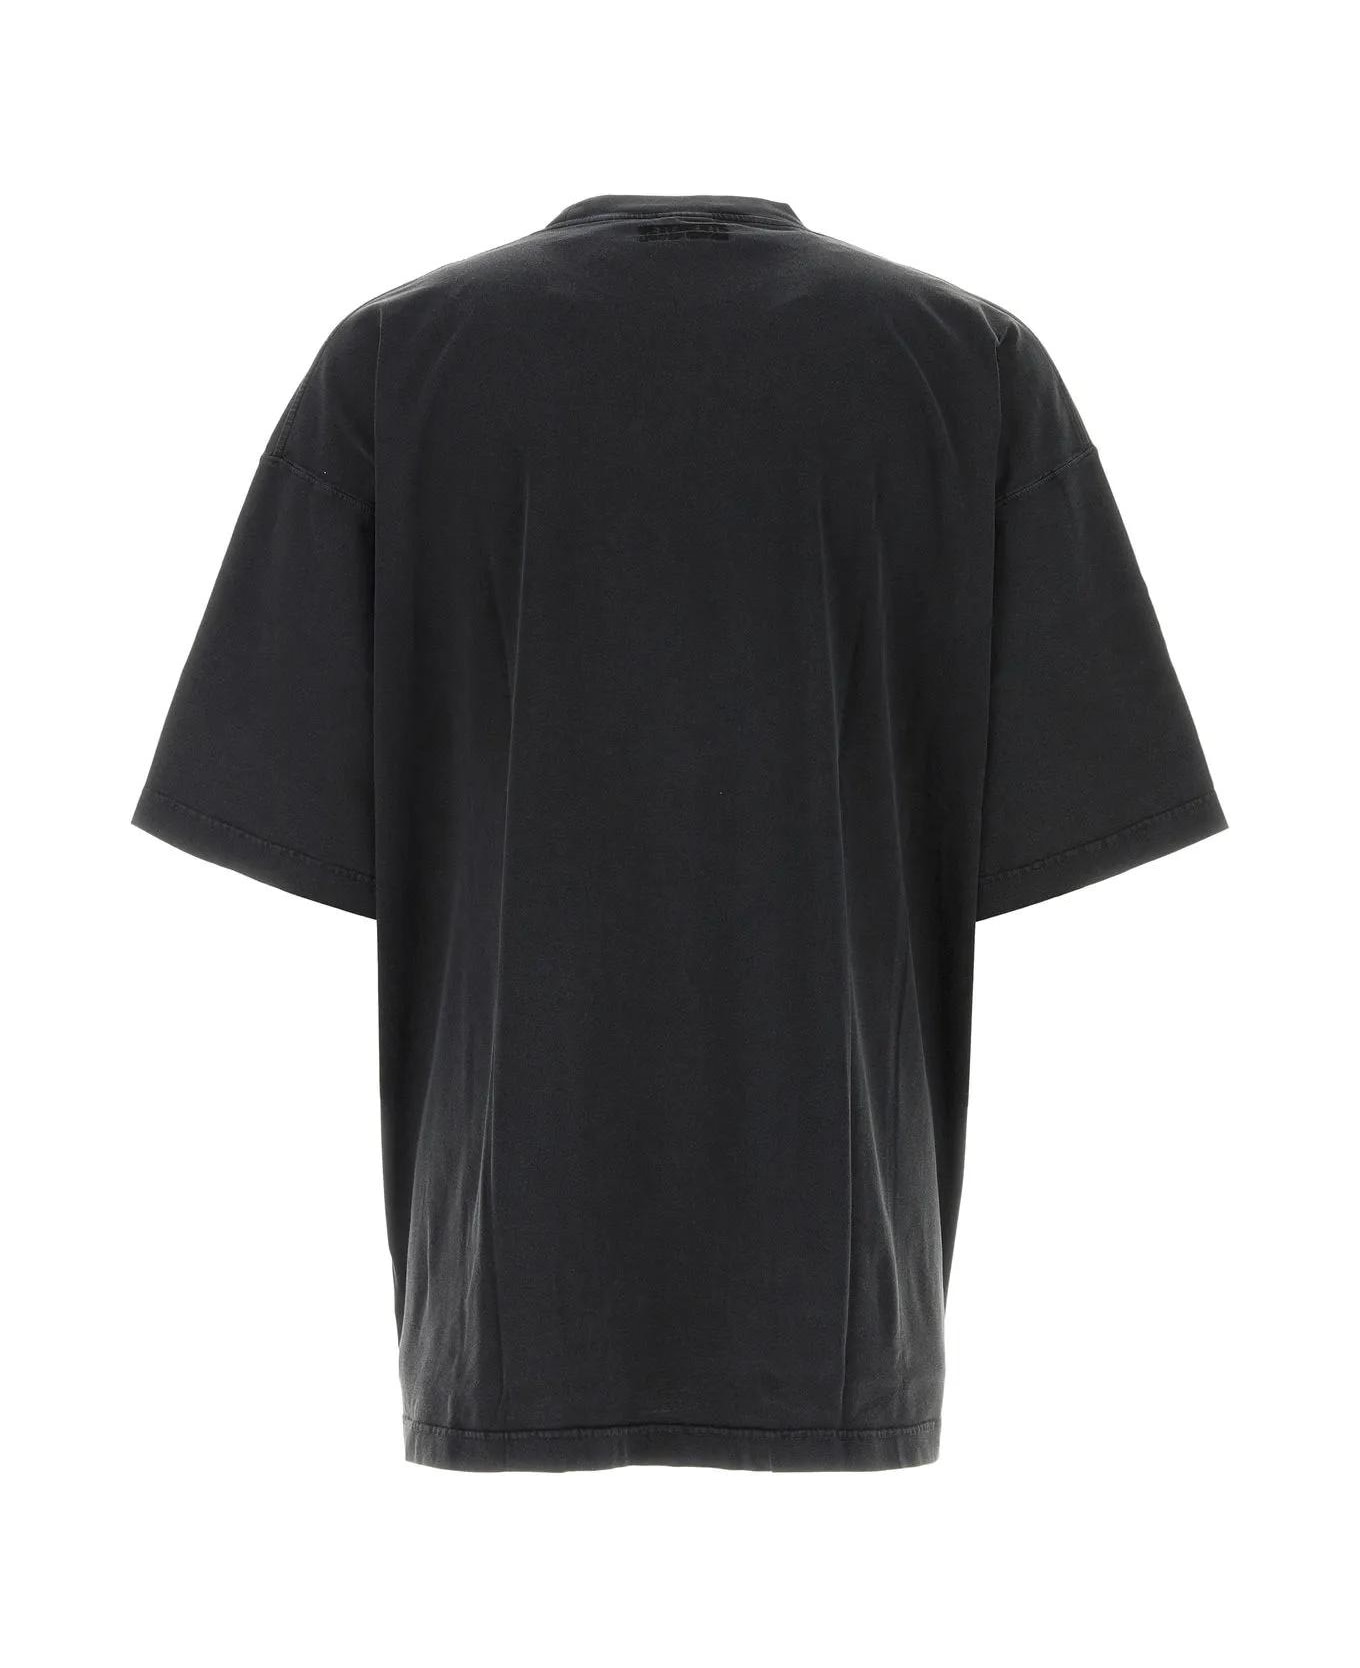 VETEMENTS Slate Cotton Oversize T-shirt - BLACK